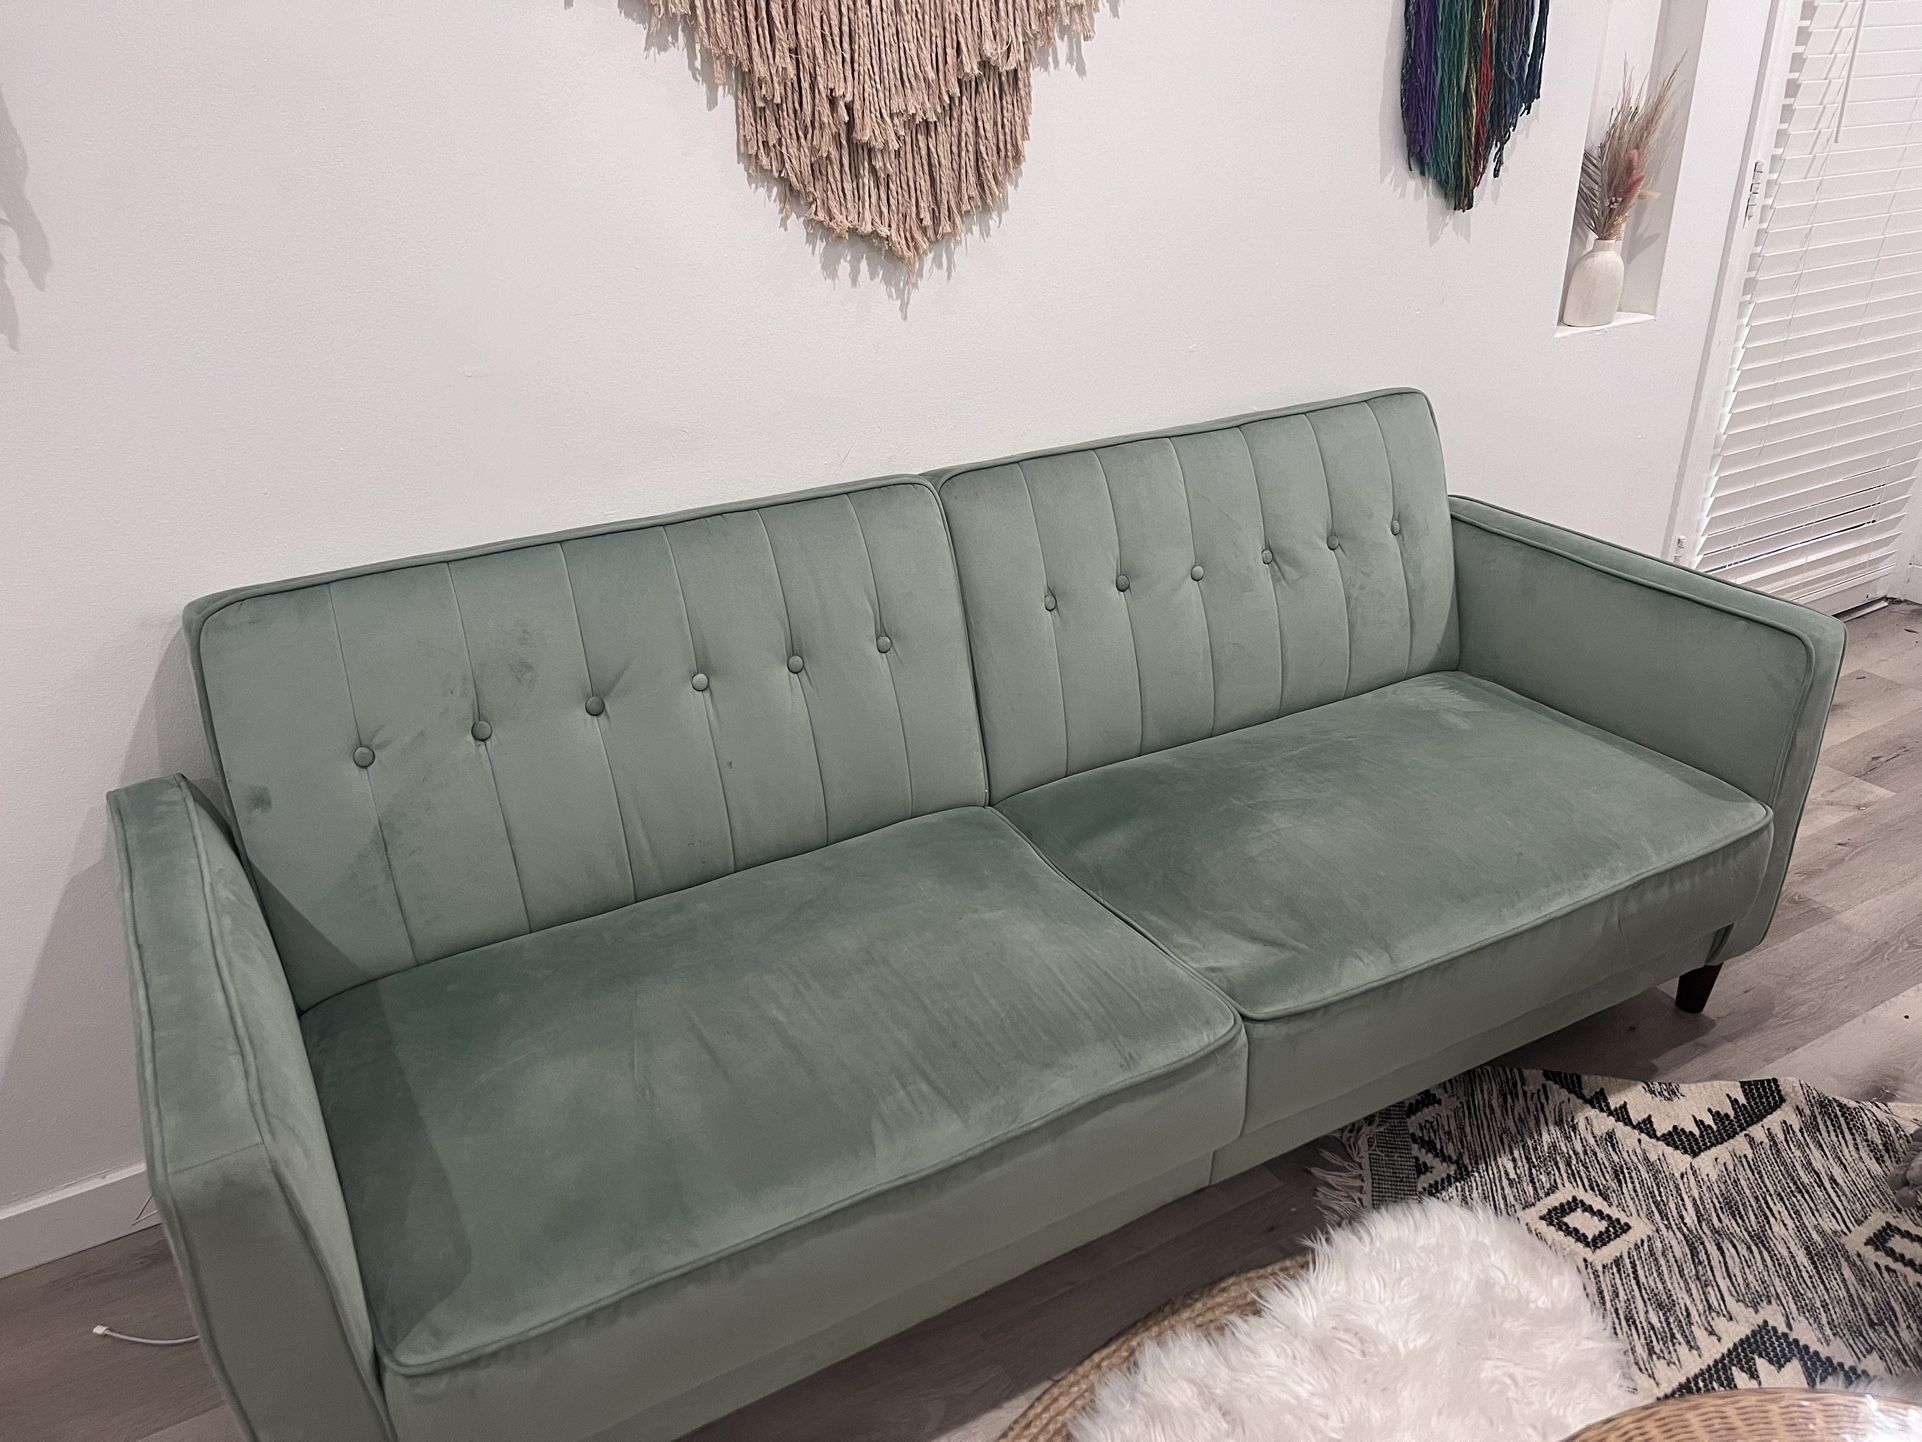 Loveseat/ Futon Sofa Bed 